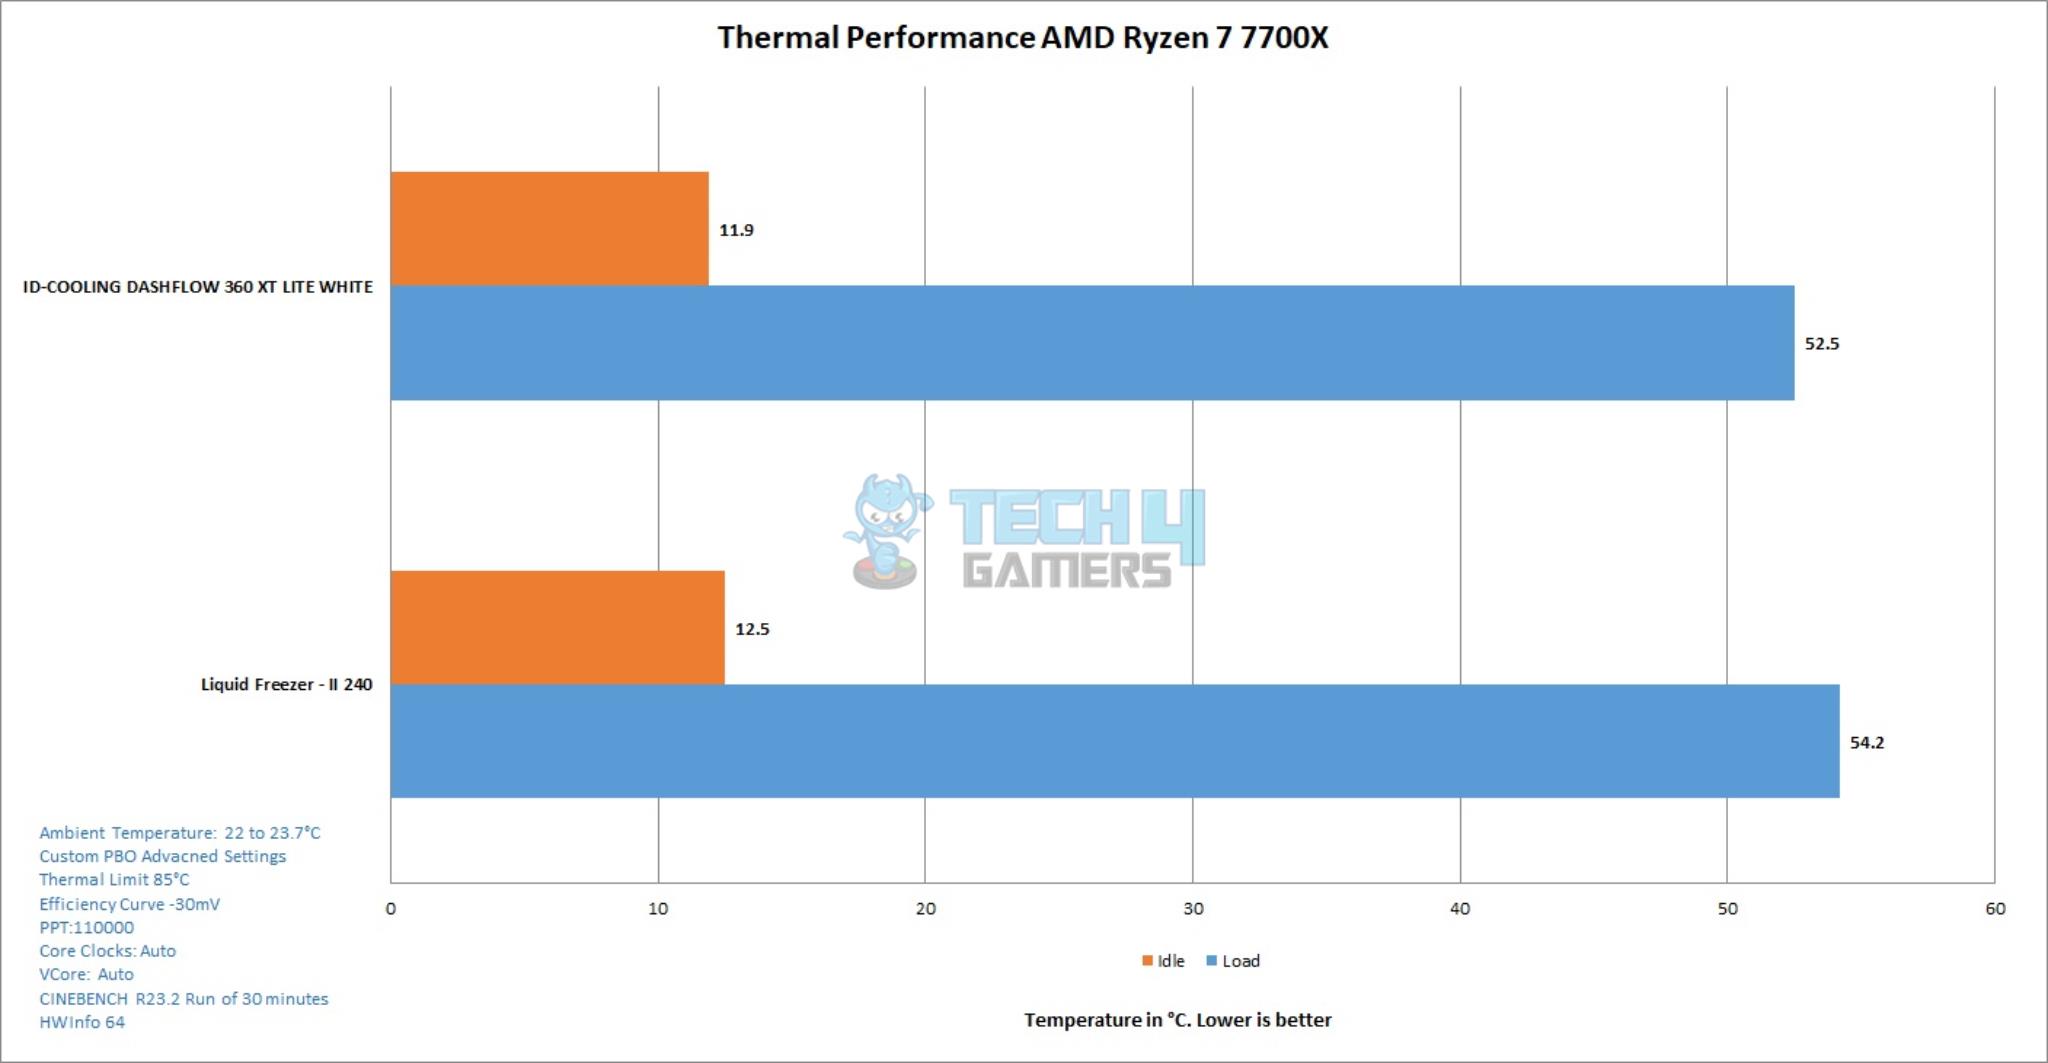 ID-COOLING DASHFLOW 360 XT LITE White Cooler — Thermal Performance